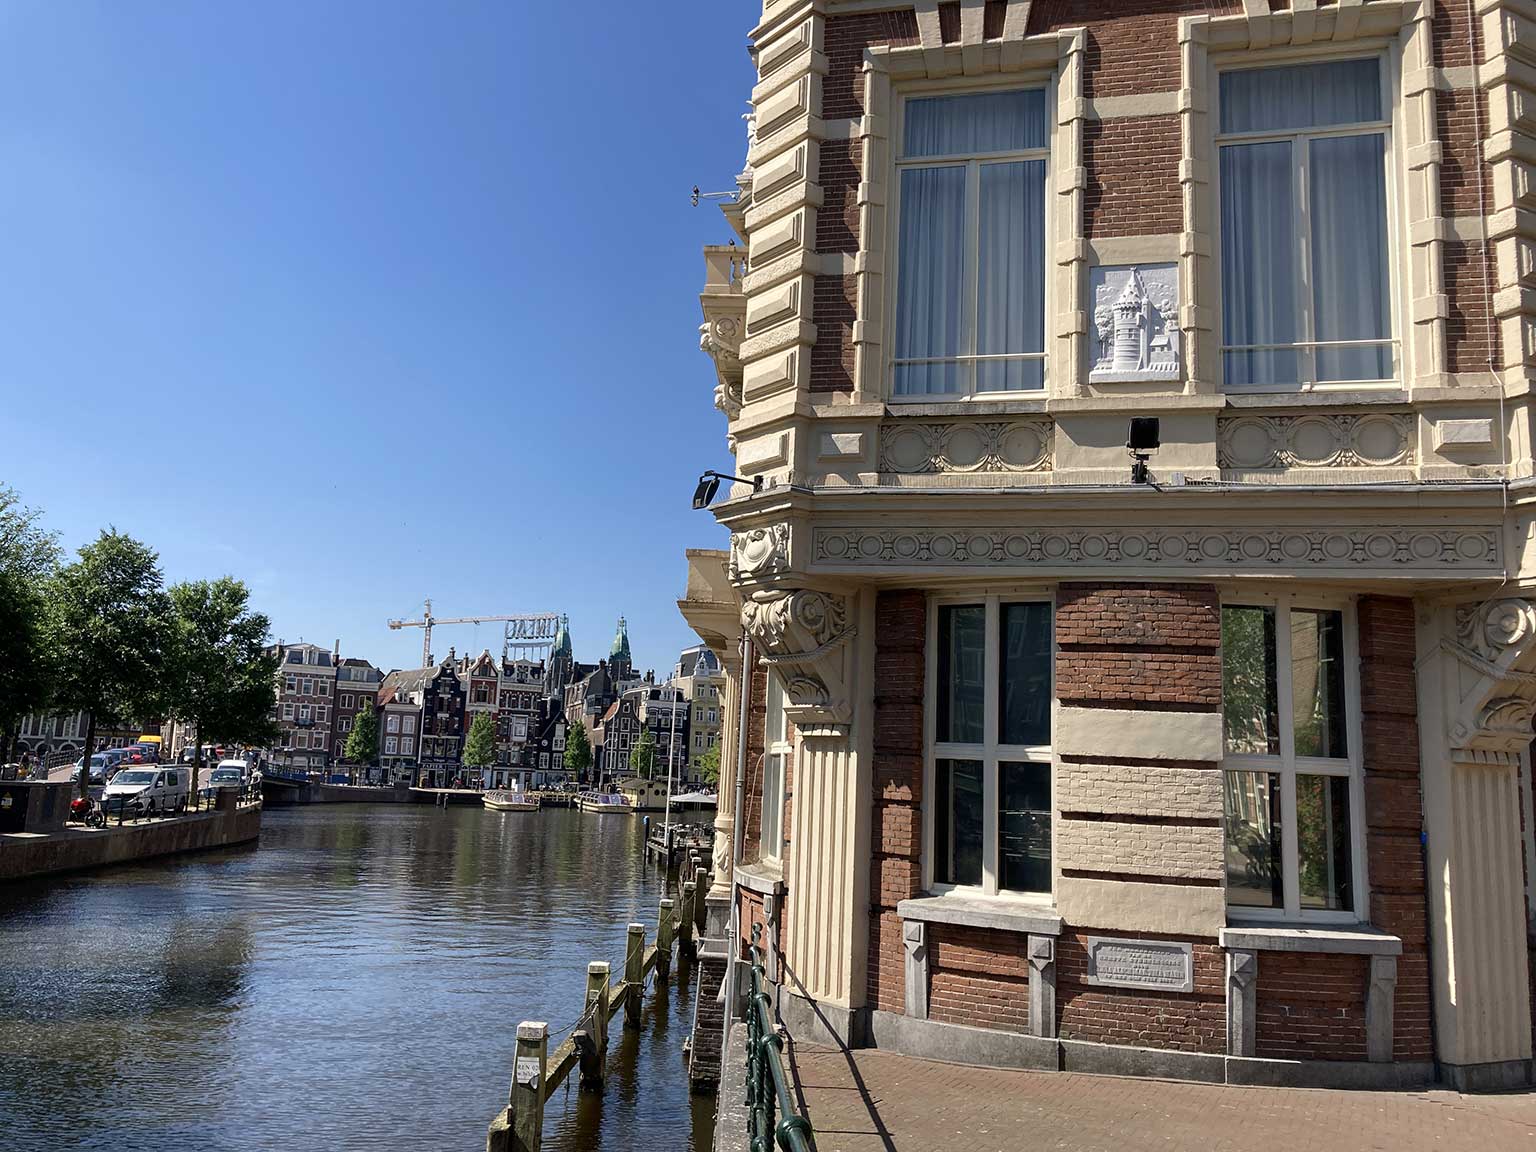 Doelen Hotel at the corner of the Nieuwe Doelenstraat, Amsterdam, looking towards the Amstel river